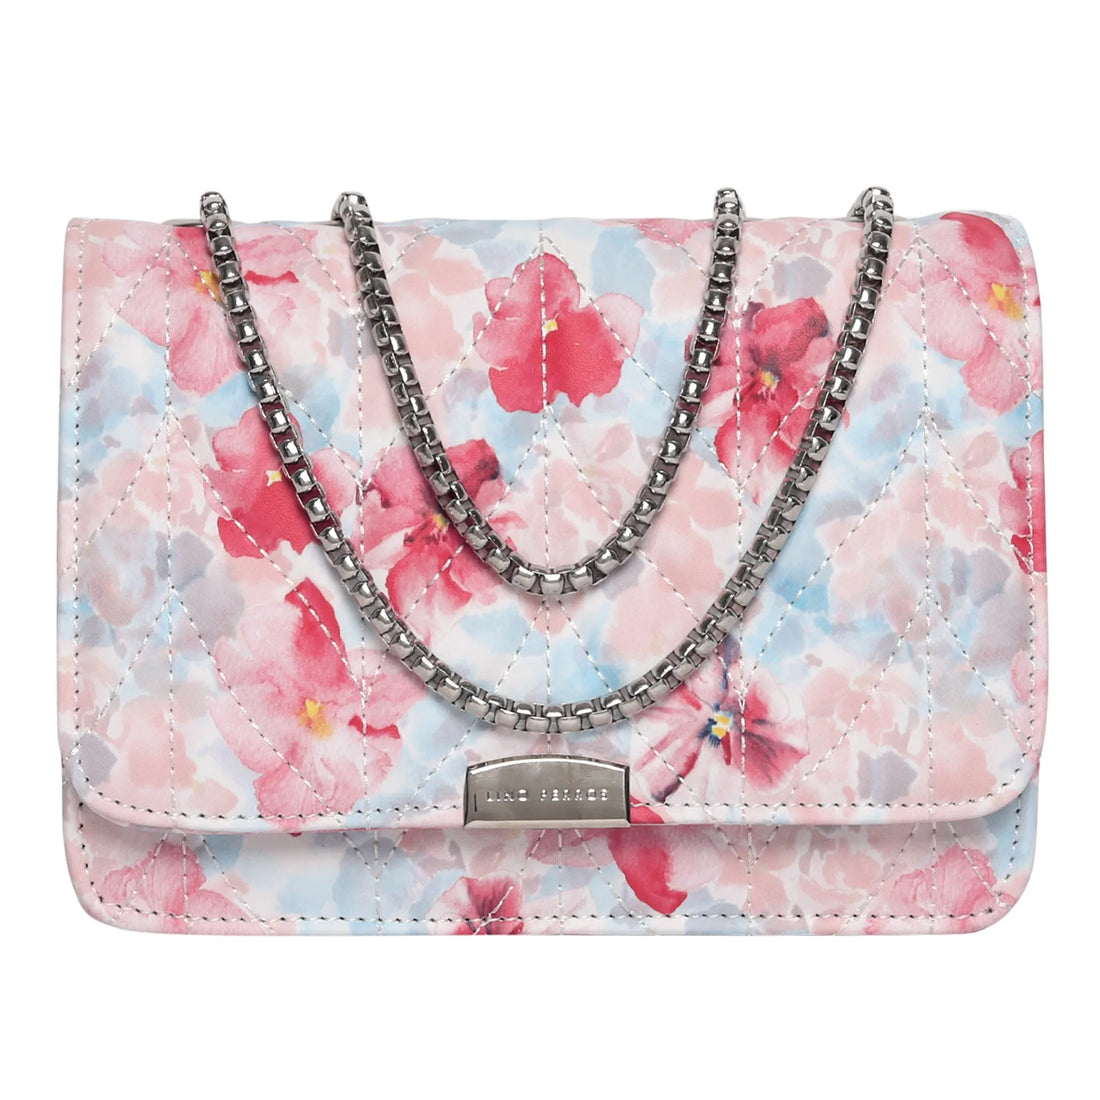 Handbags for Women: Stylish and Designer Bags for Girls | Linoperros